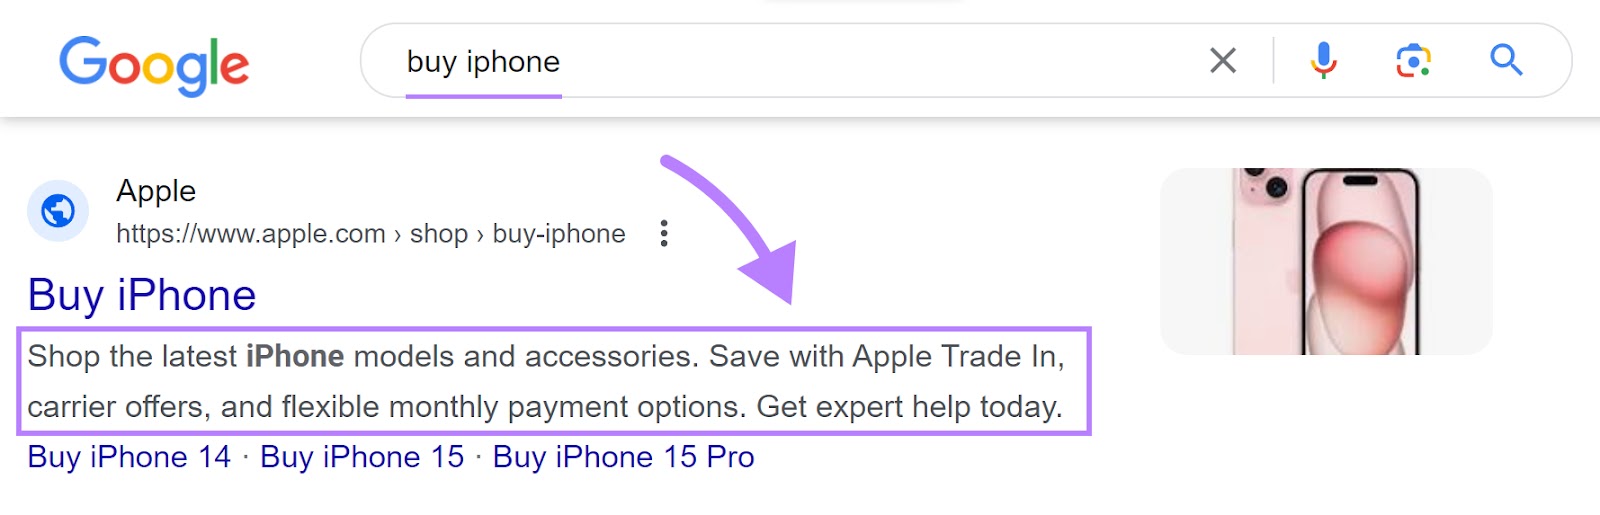 Apple's "Buy iPhone" page meta description on SERP